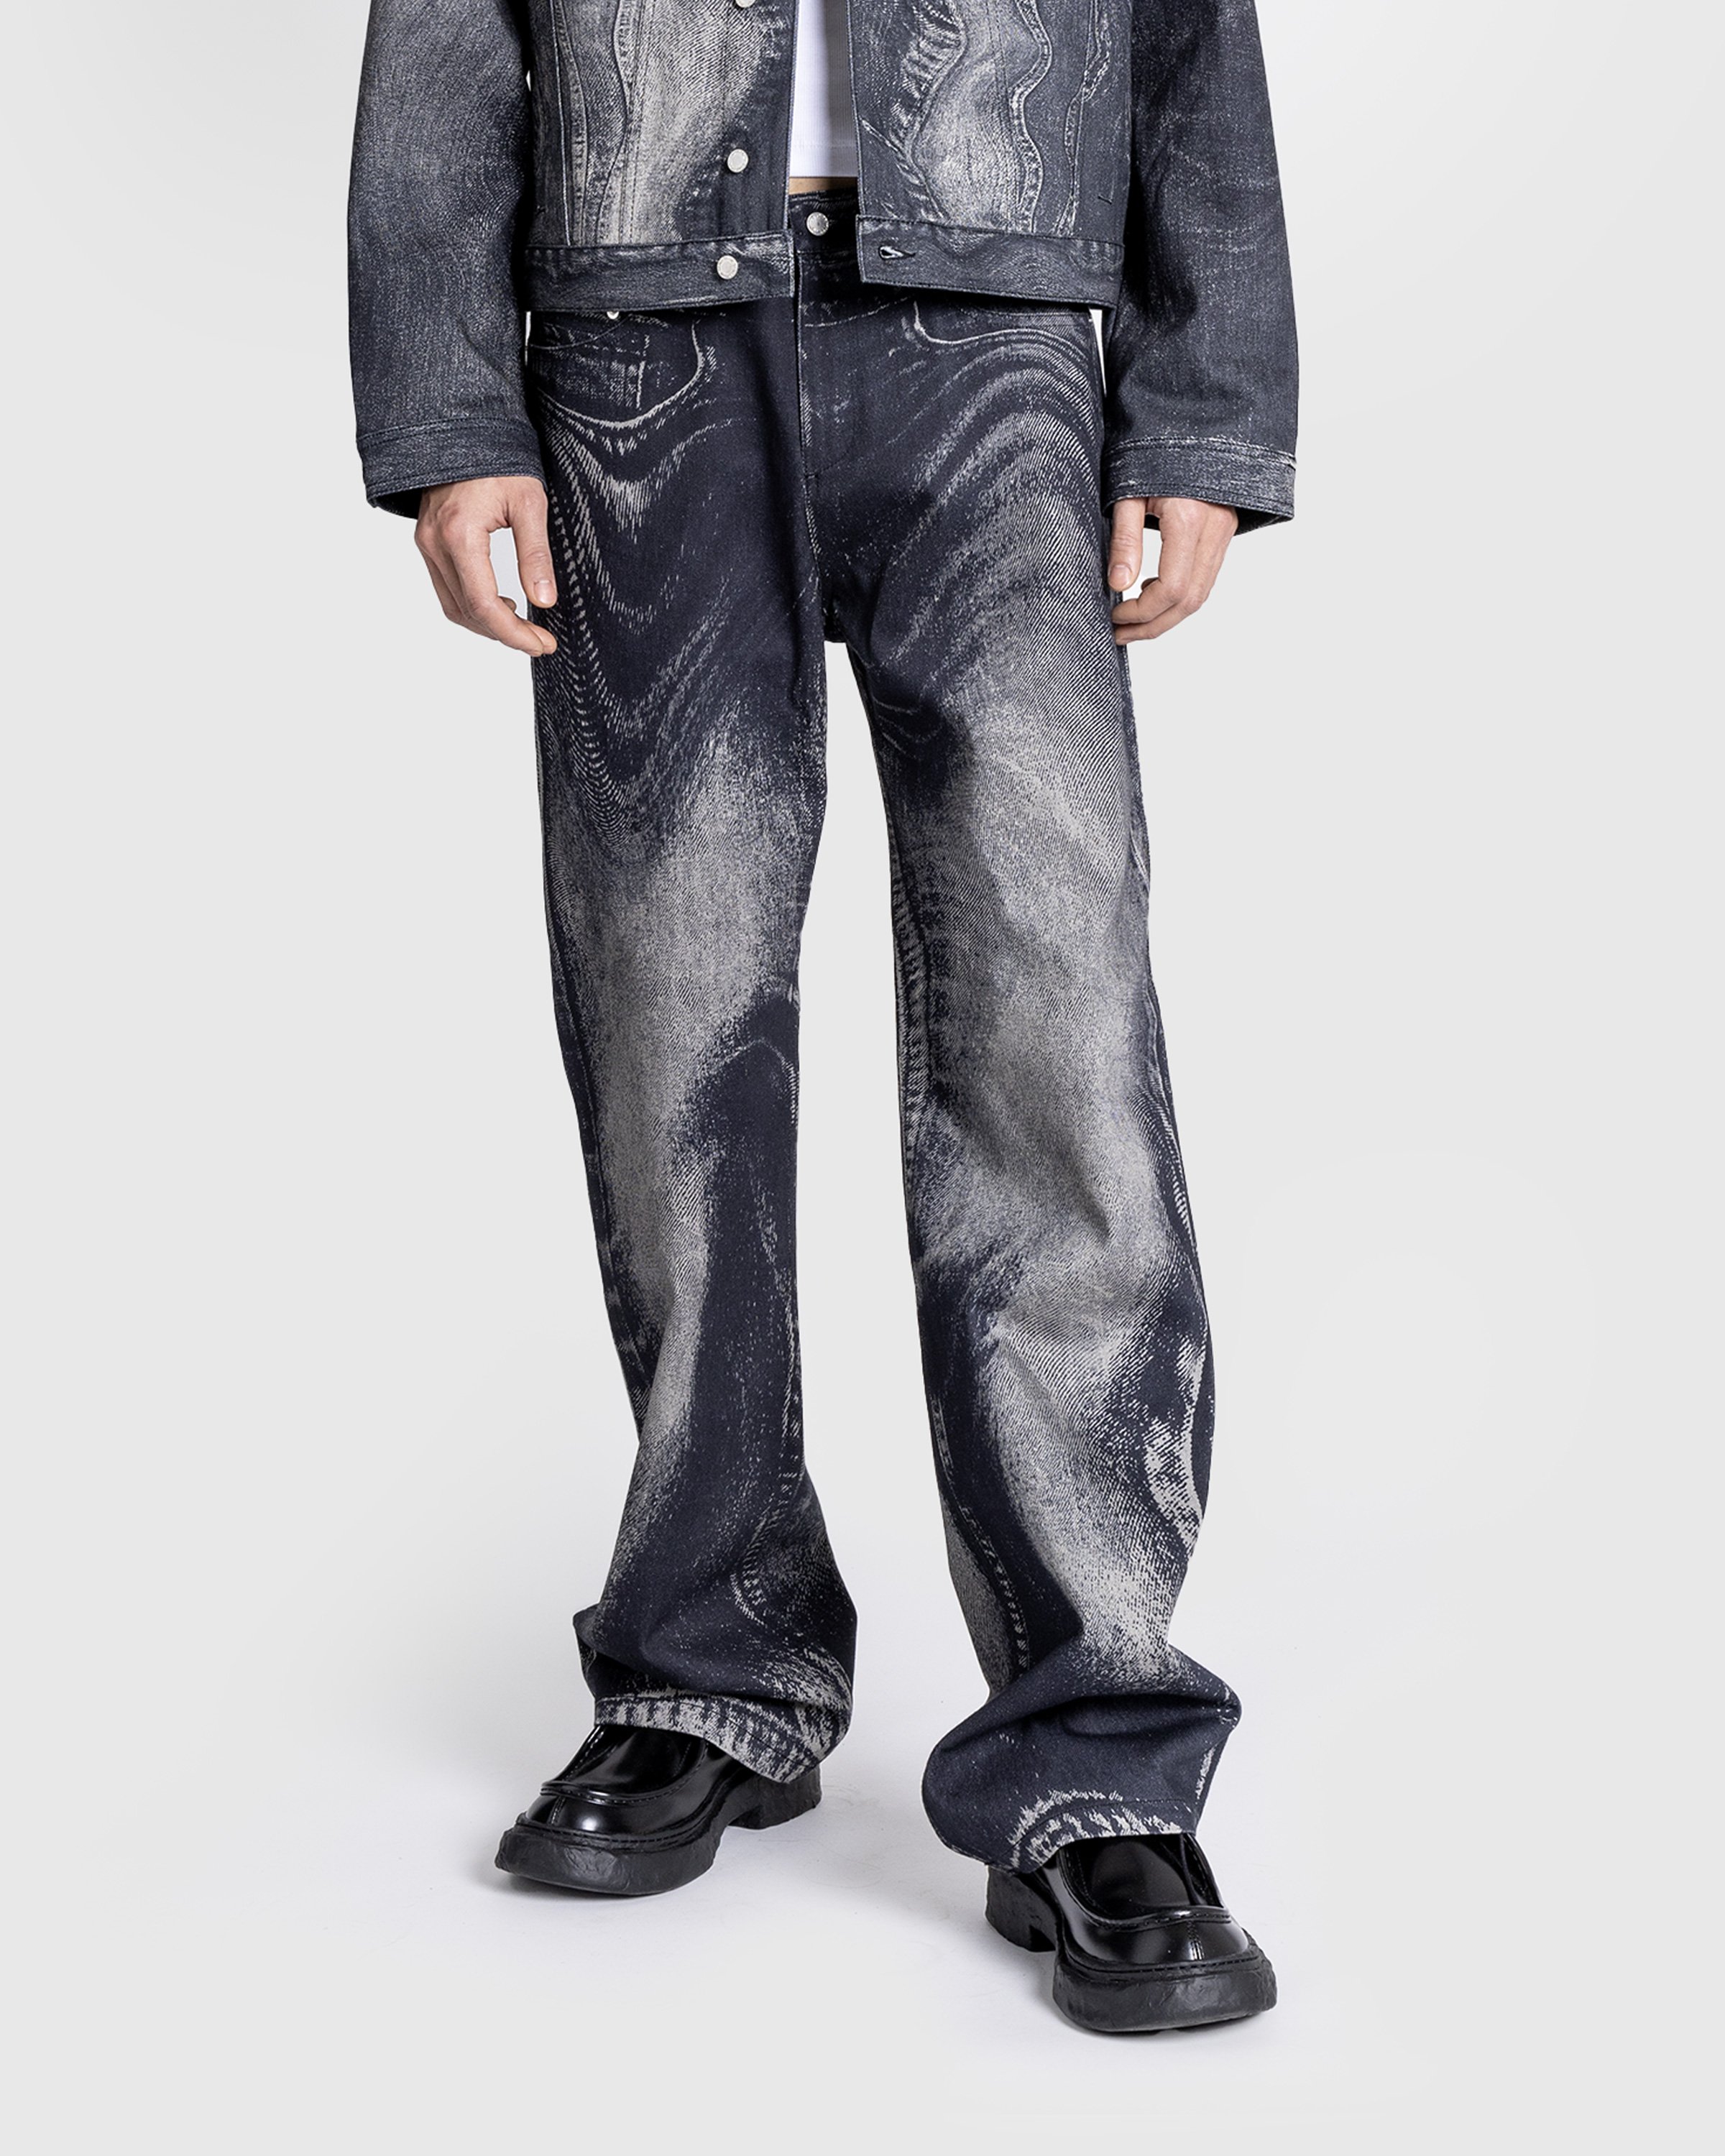 CAMPERLAB - Jeans - Clothing - Multi - Image 2